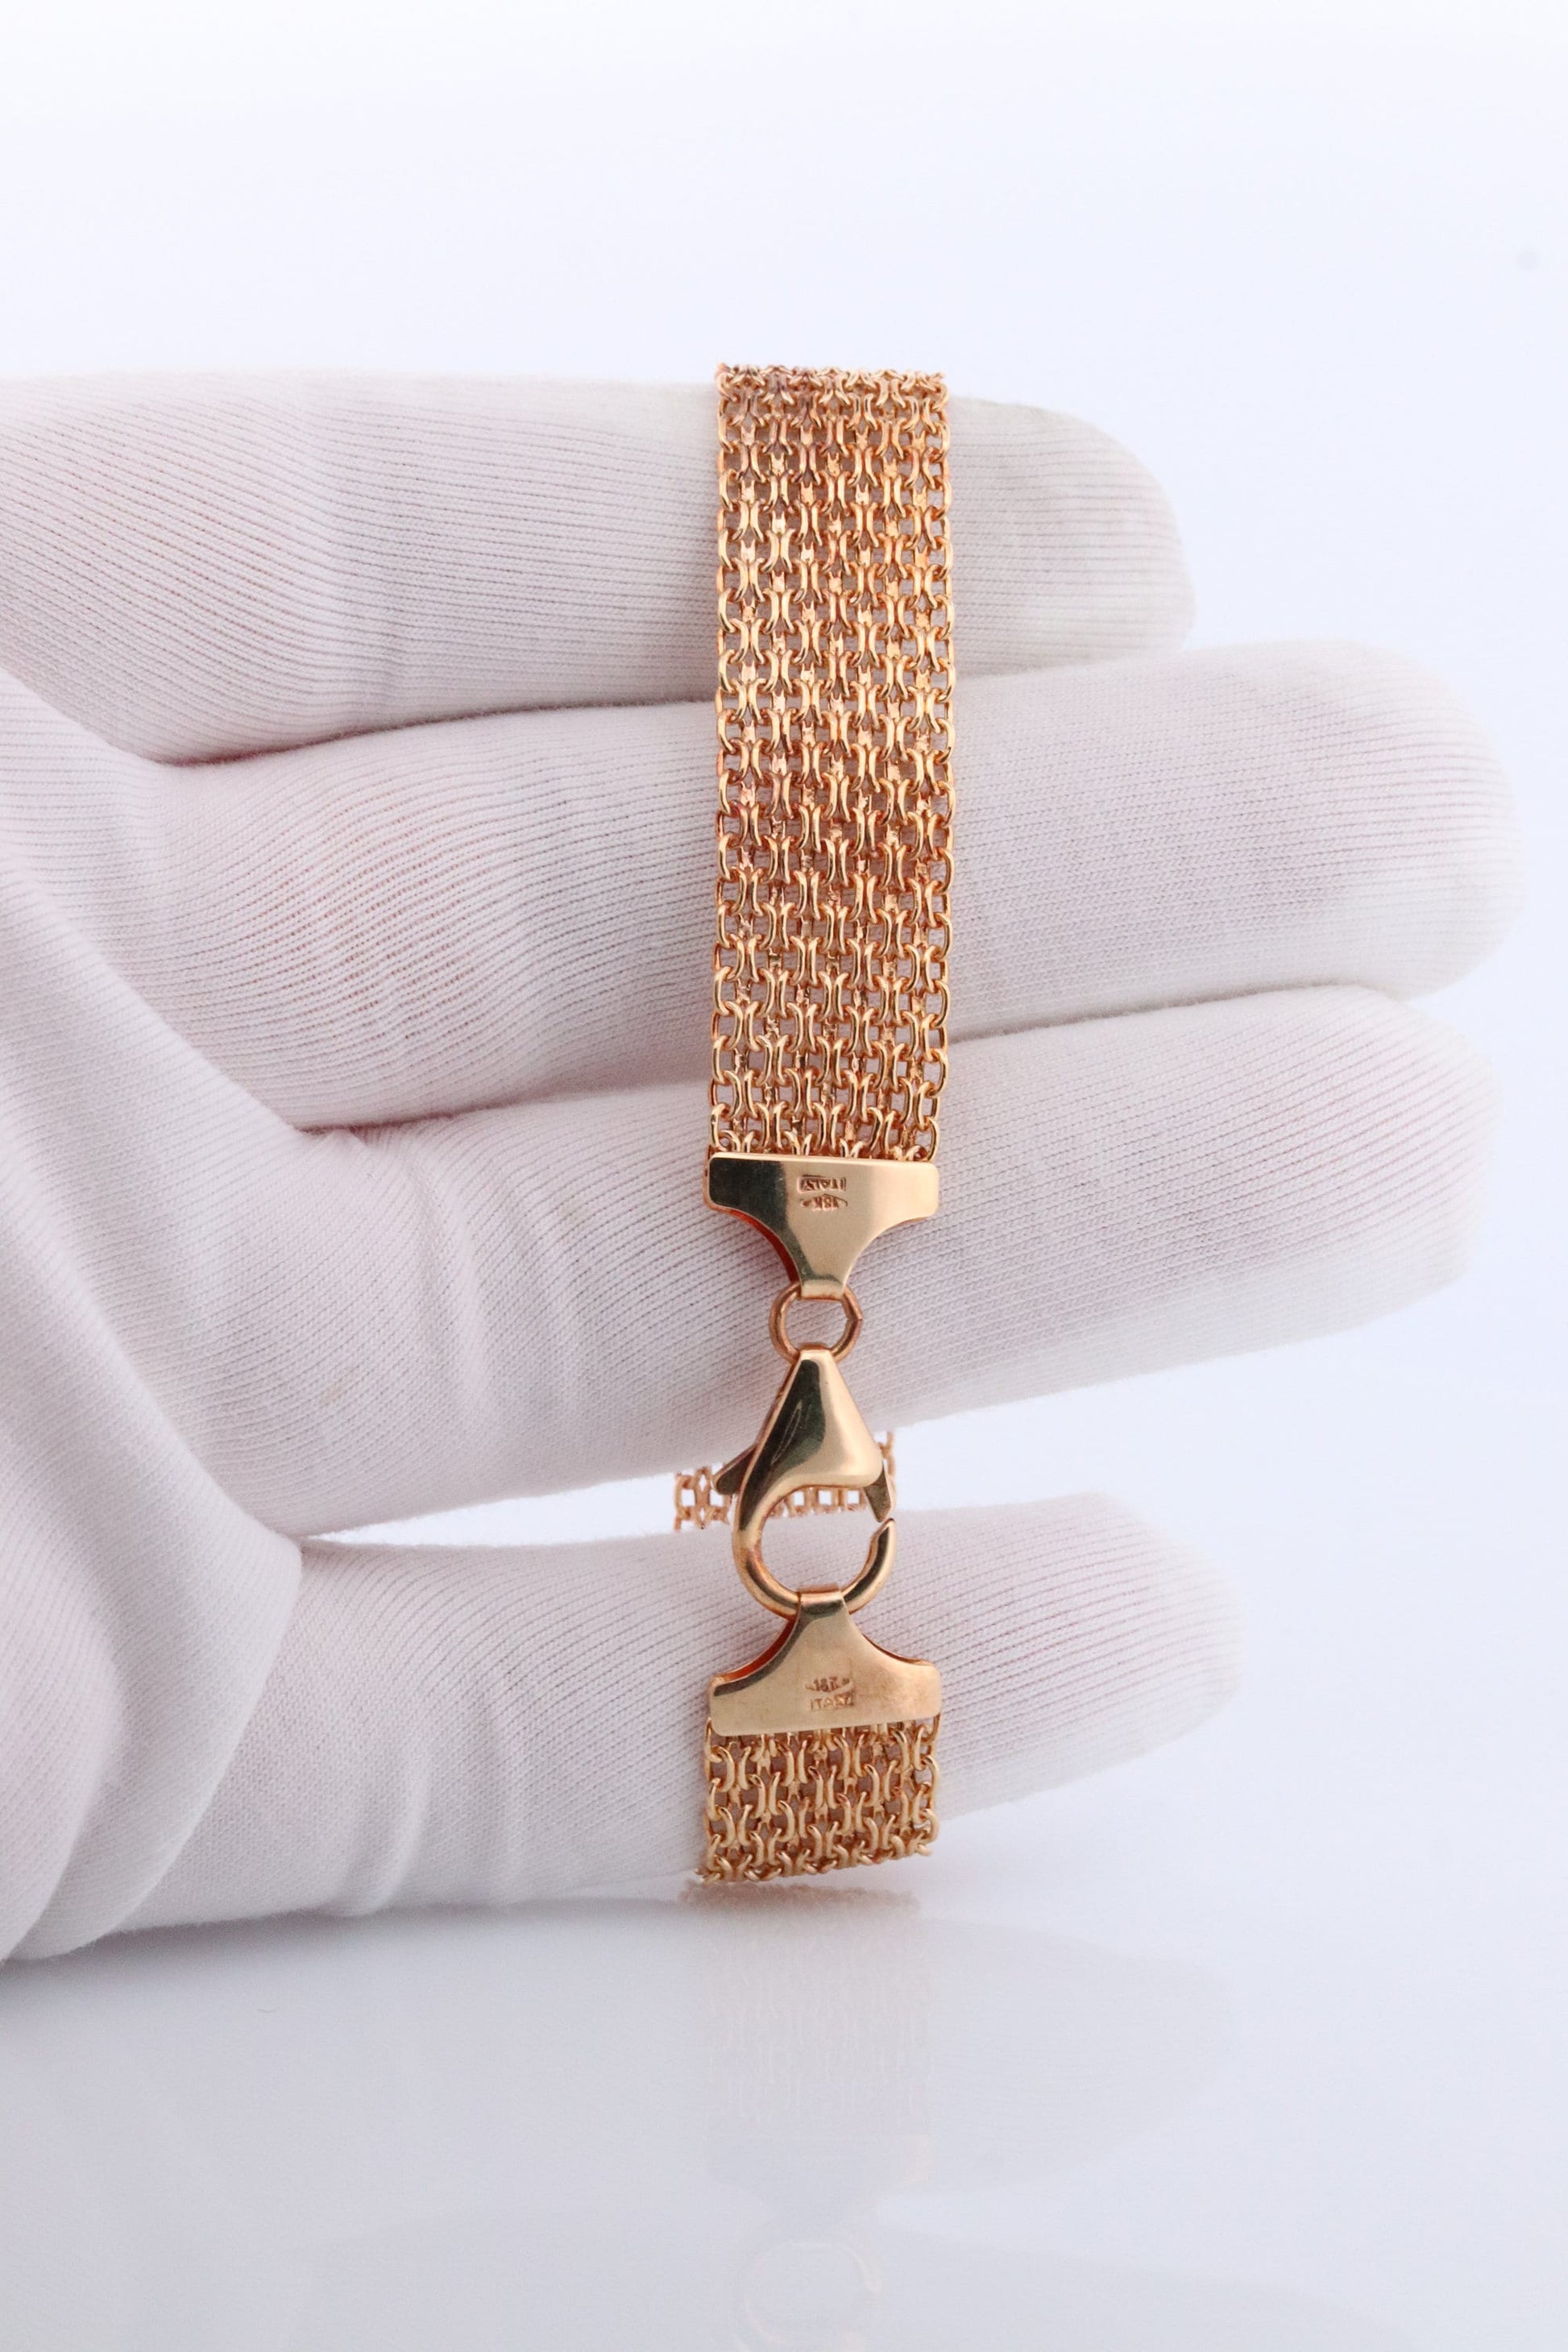 18k Bismark ChainMail Bracelet. 18k WIDE Chain Mesh link Yellow gold Italian Bracelet. Chain Mesh Bracelet.